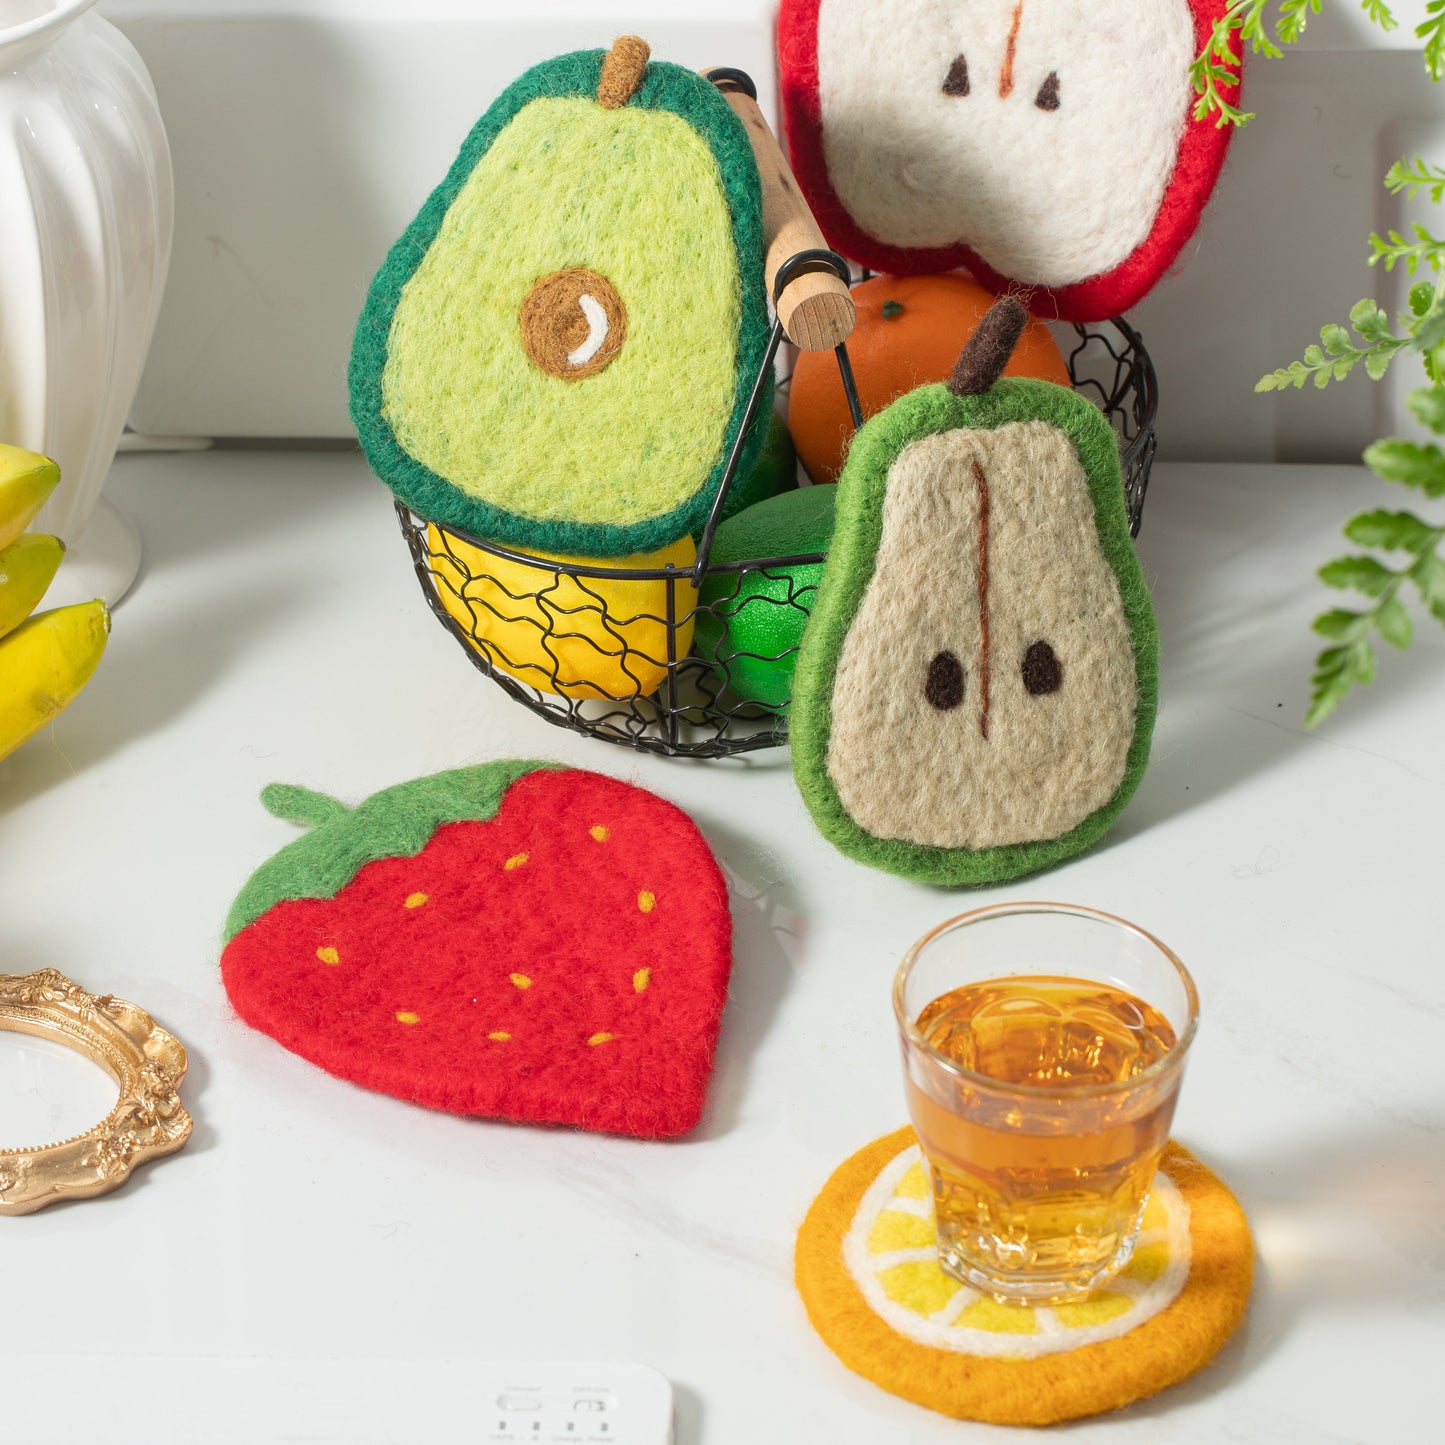 Handmade Wool Felt Fruits Cup Coasters Made in Nepal - Avocado, Apple, Pear, Orange